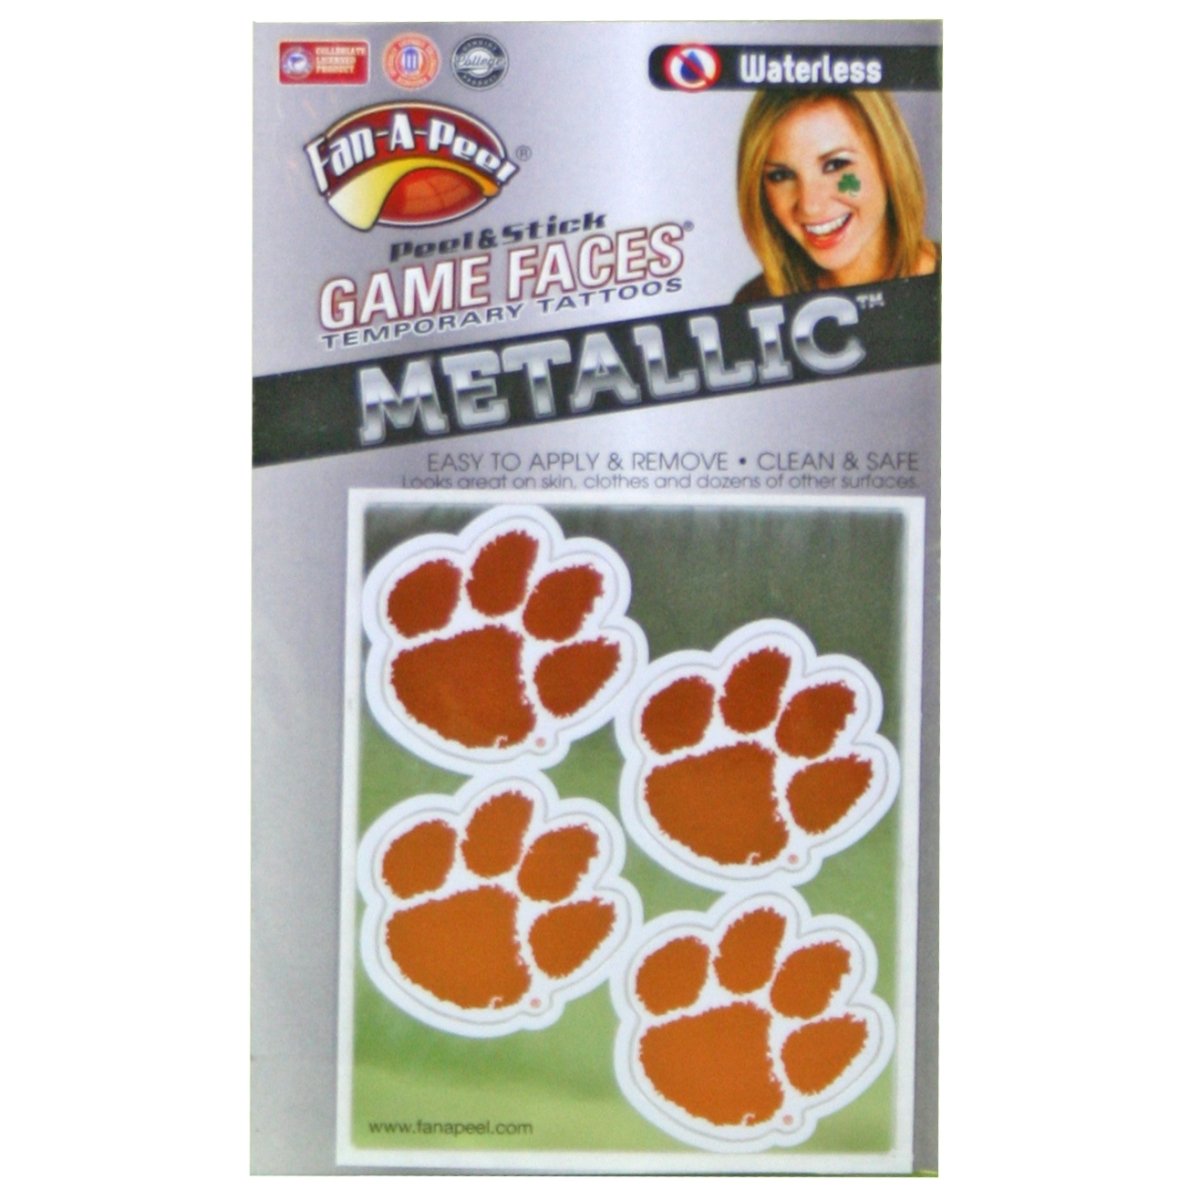 Gamefaces Metallic Peel & Stick Temporary Tattoos 4 Pack Orange and Wh - Mr. Knickerbocker